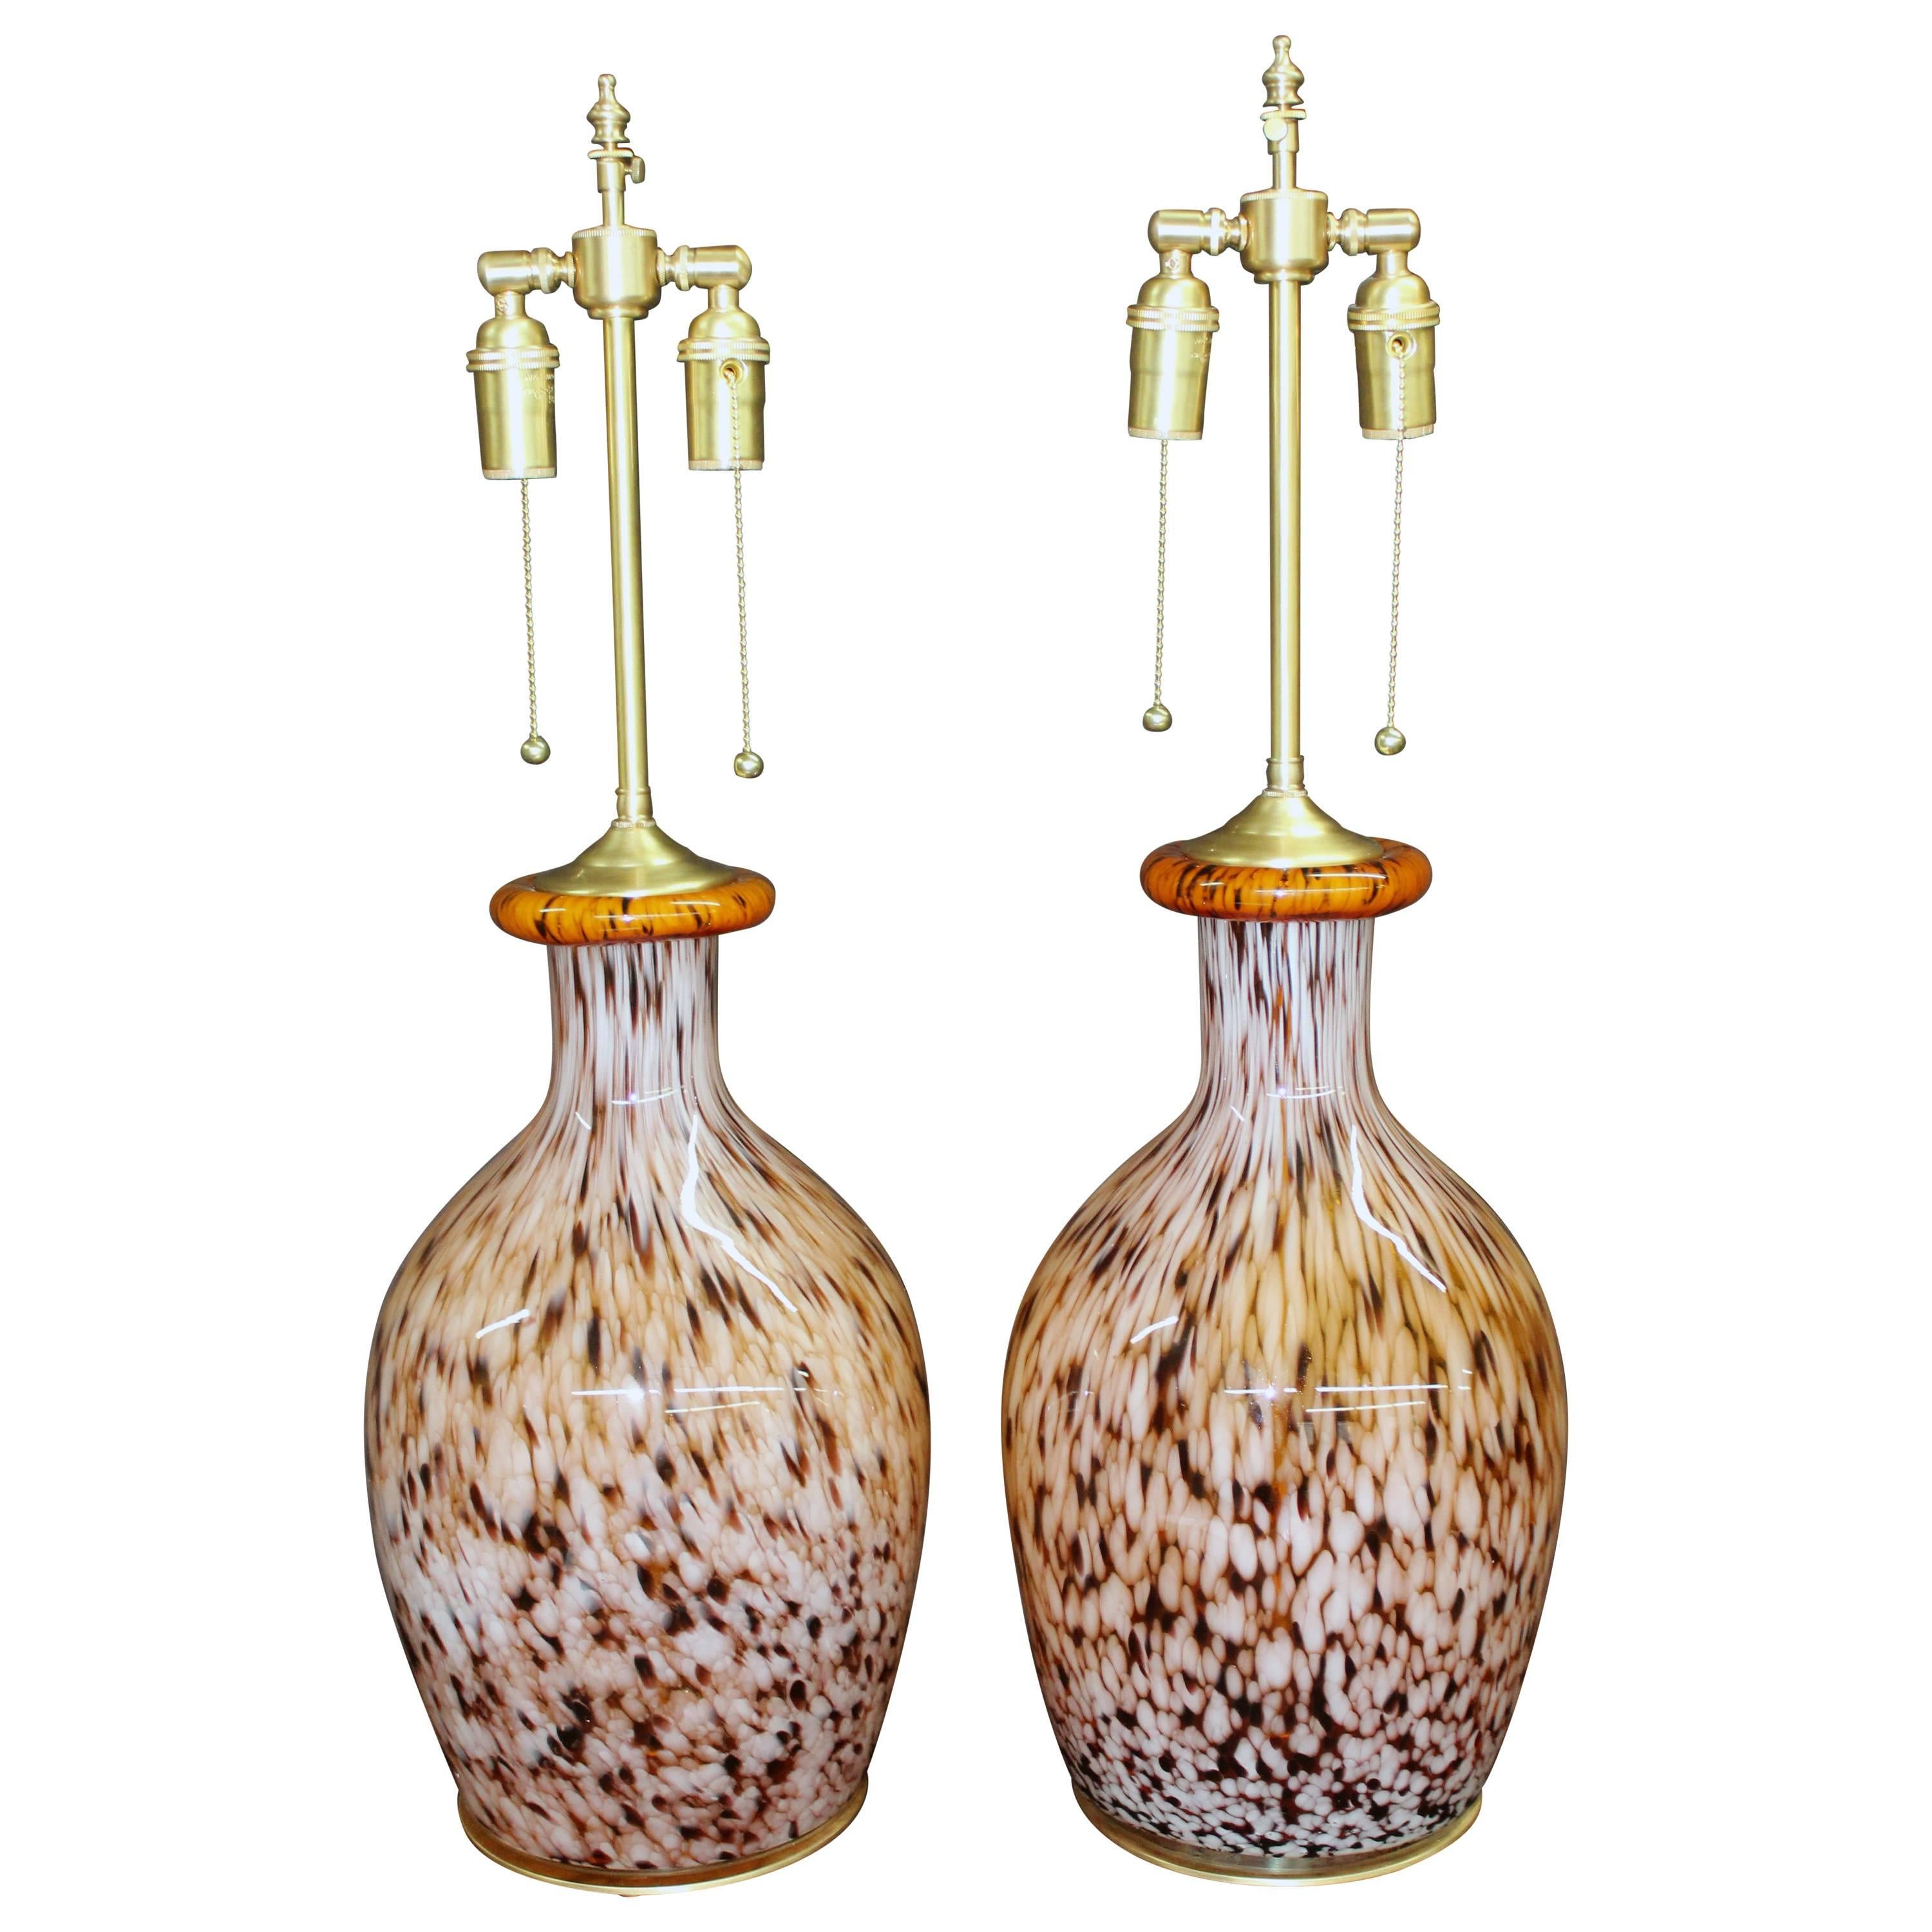 Beautiful Handblown Glass Vessels with Lamp Application